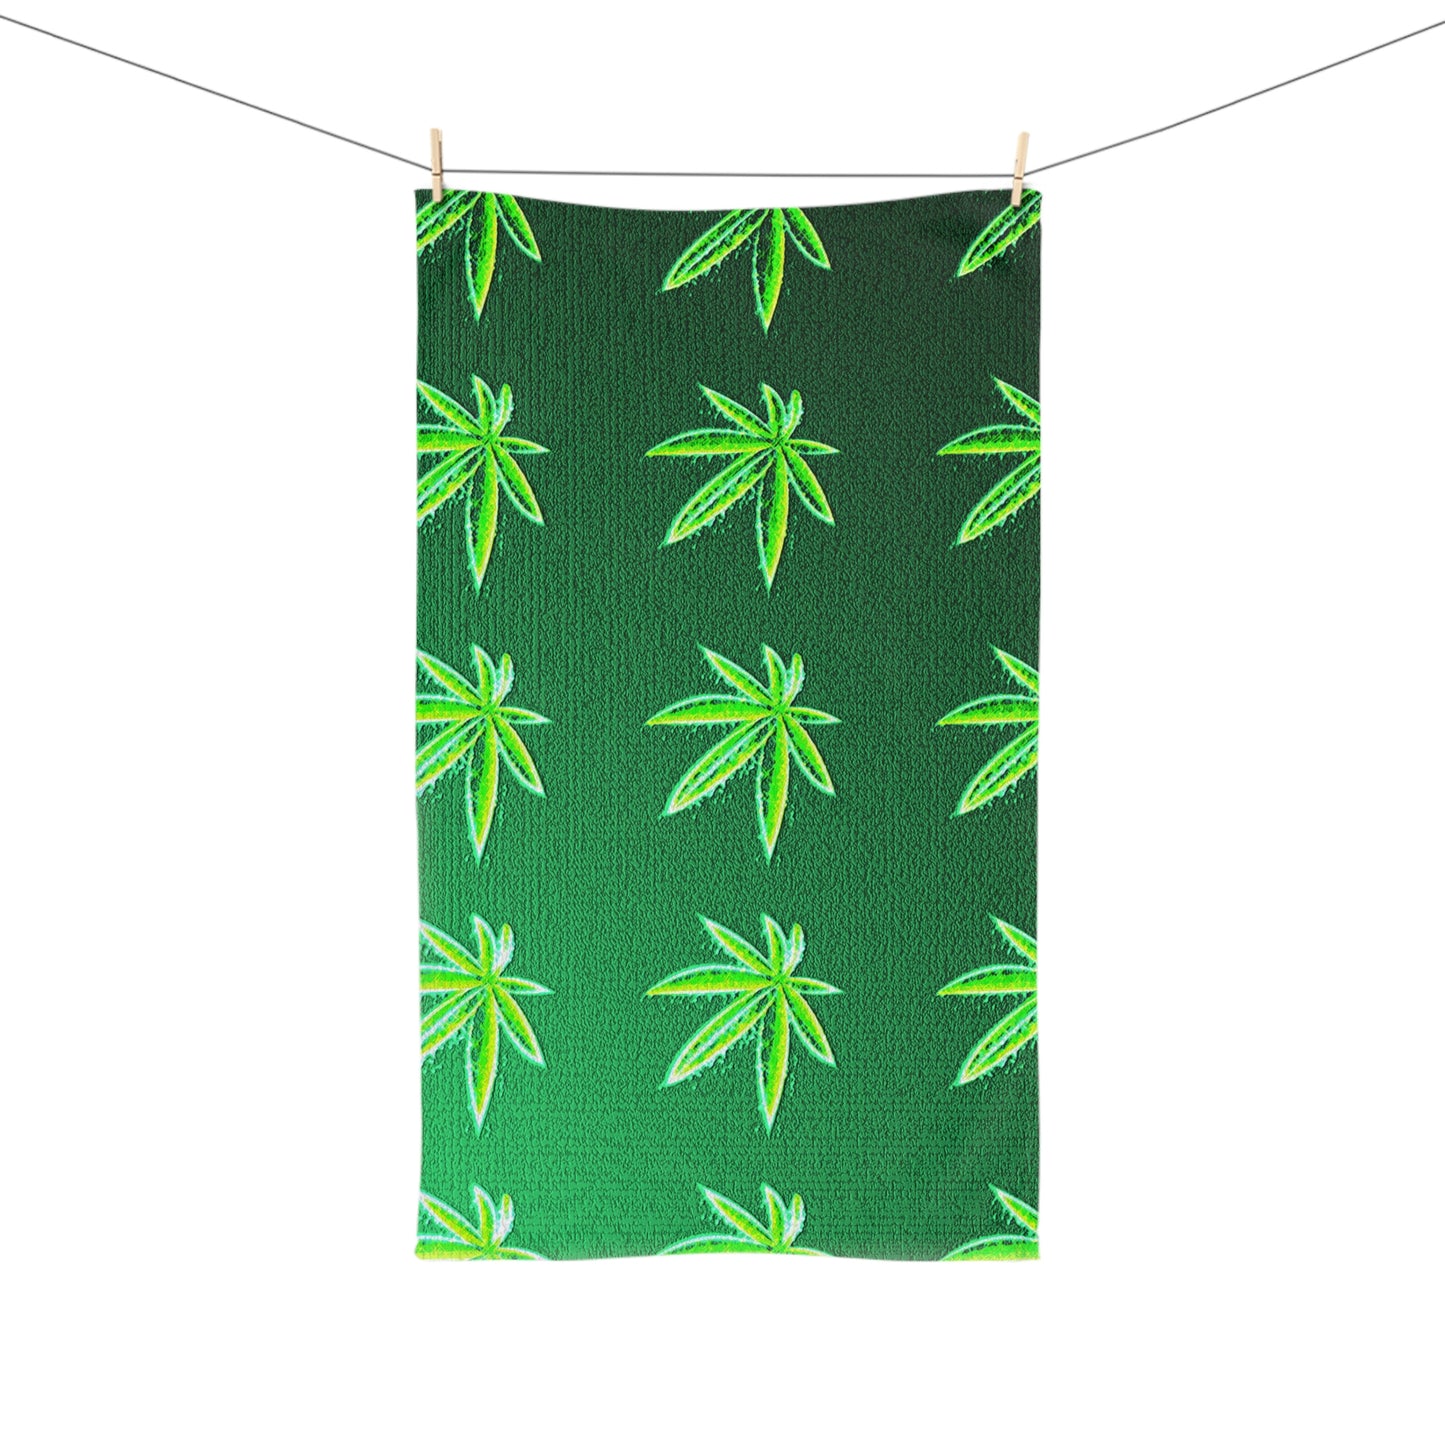 Green Leaf Marijuana Pot Weed Leaf 420 Hand Towel